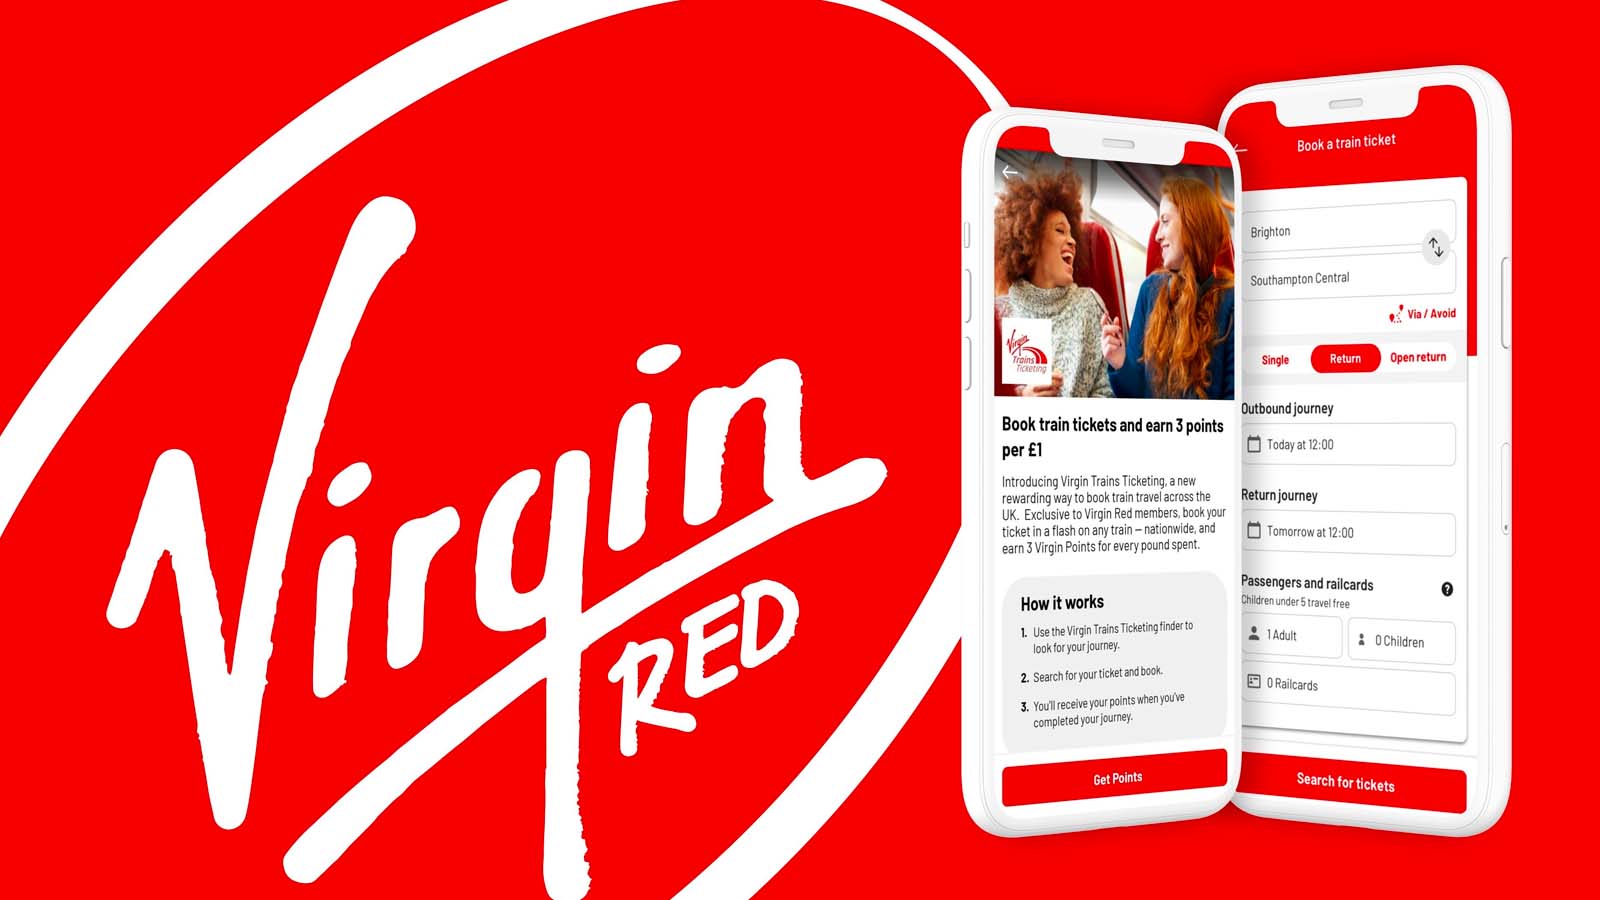 Eagle Eye’s AIR platform underpins Virgin’s new rewards club, Virgin Red